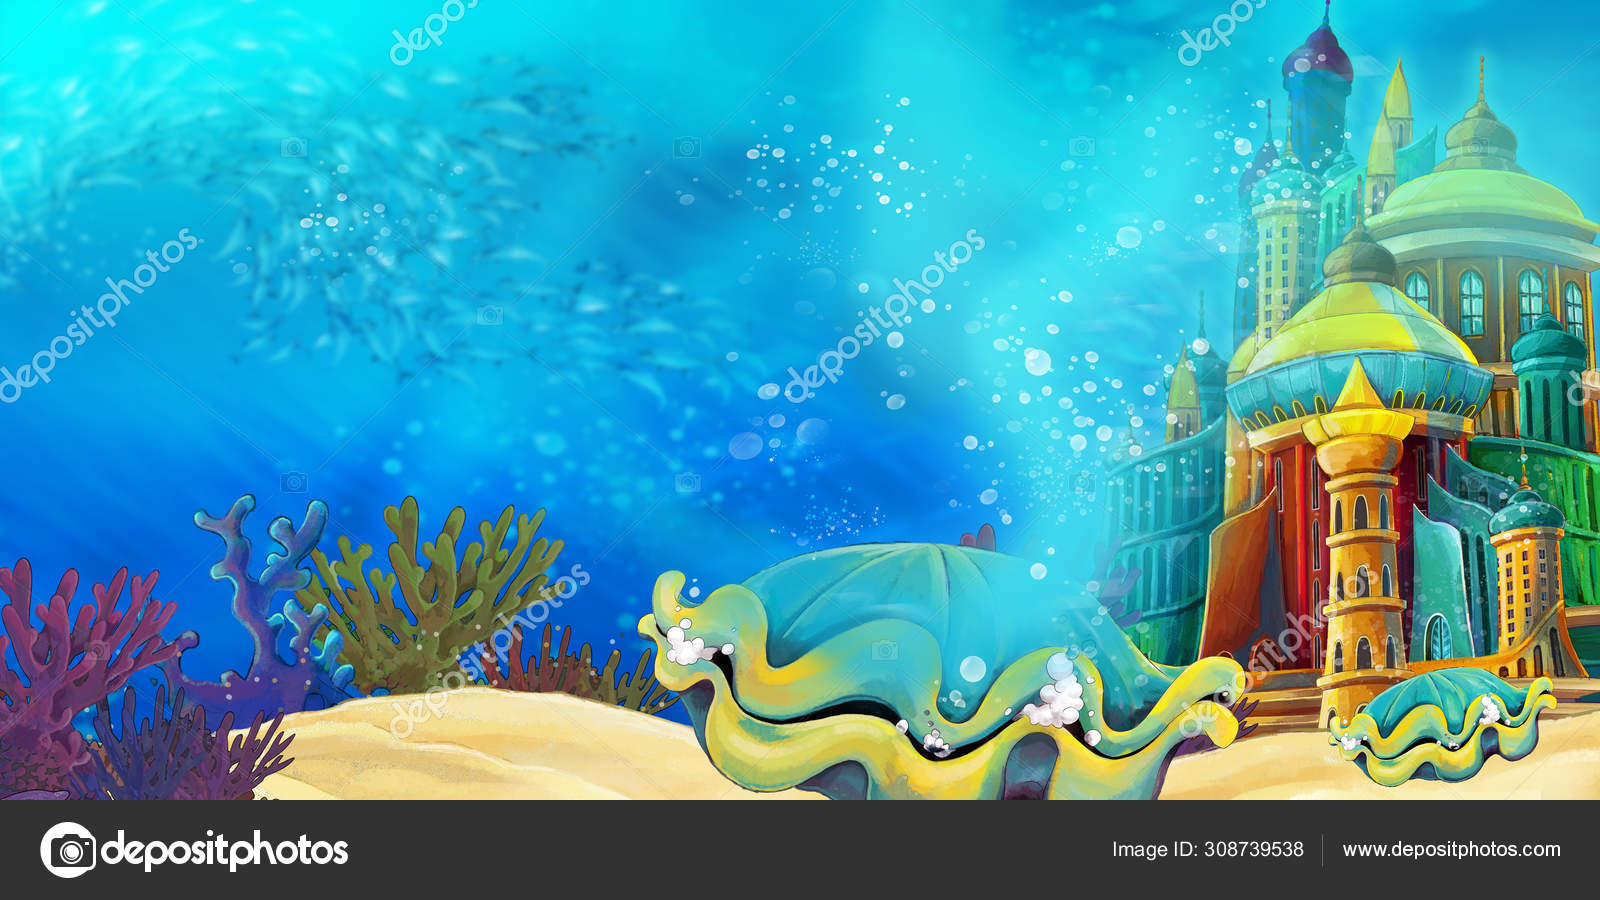 Cartoon underwater sea or ocean scene with castle - illustration for  children Stock Photo by ©illustrator_hft 308739538